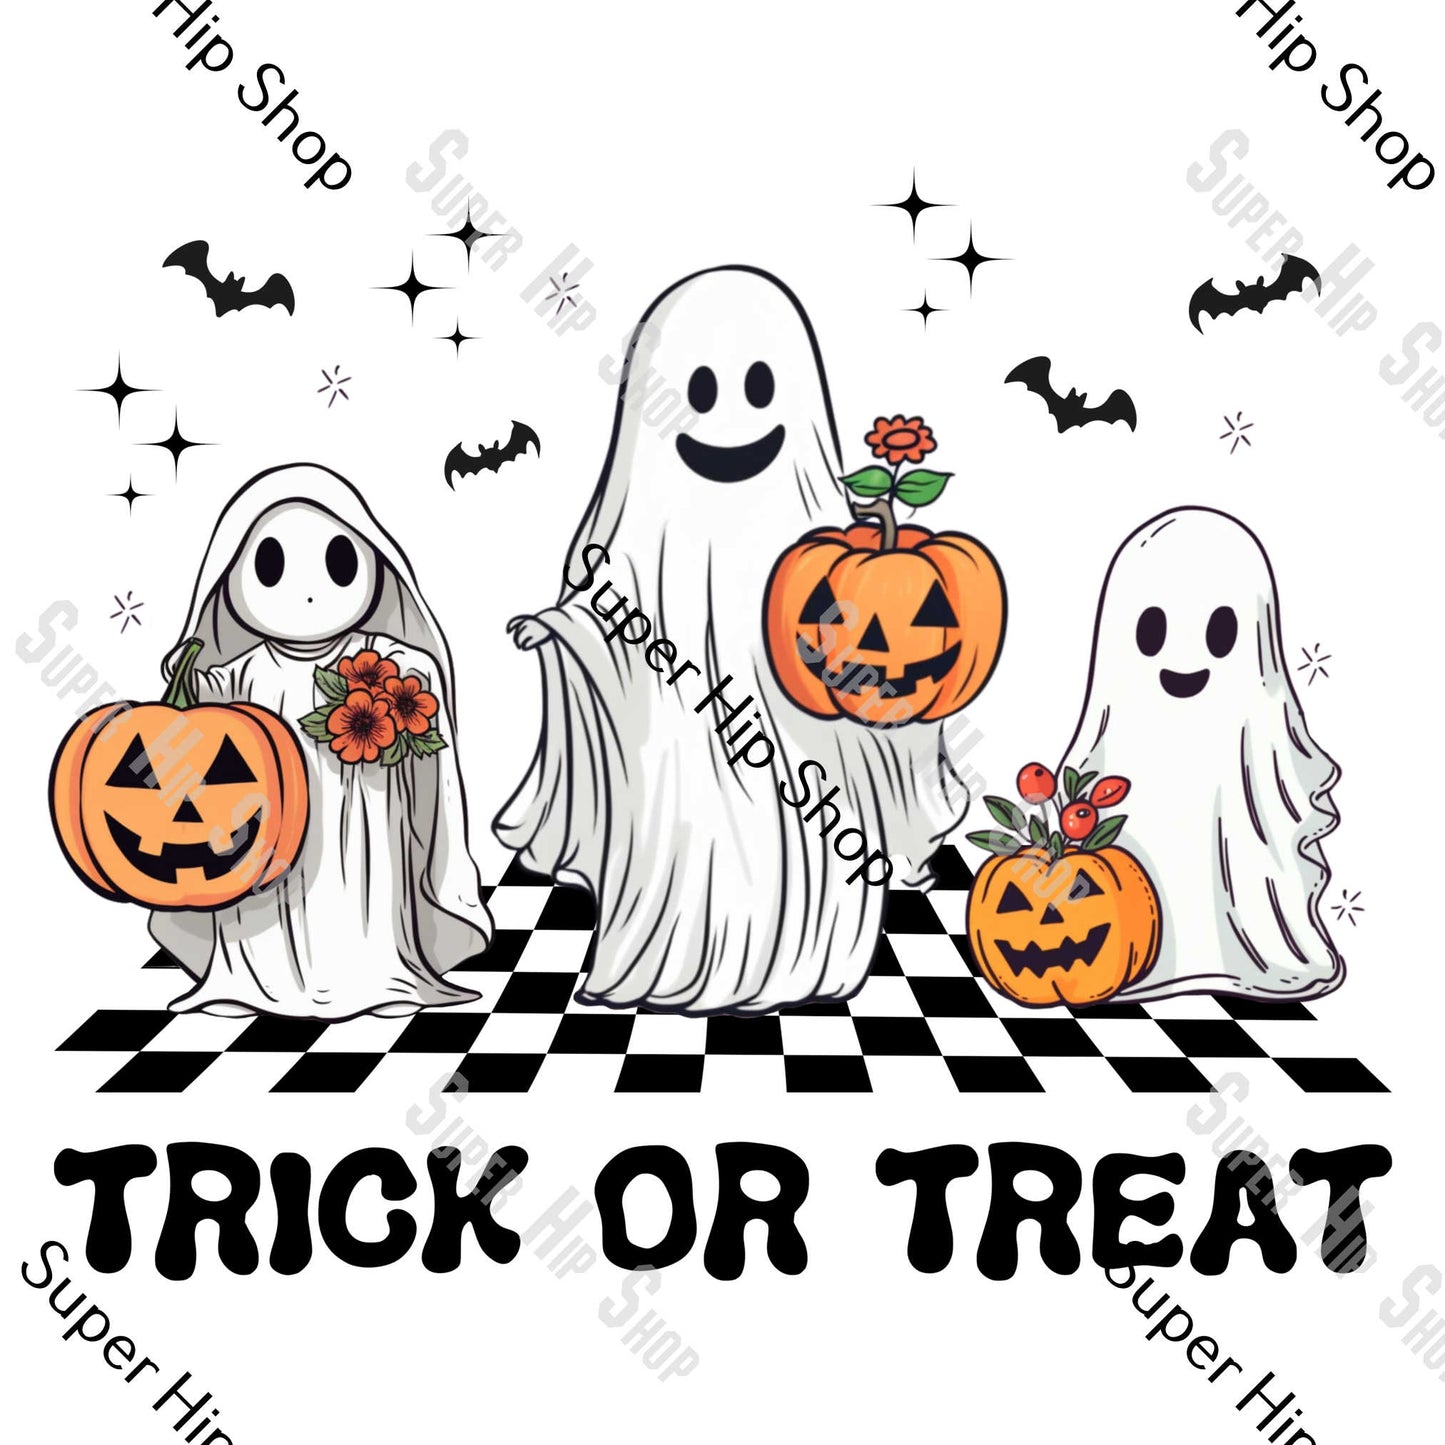 Trick or Treat Ghost and Pumpkins, Halloween, Skeleton